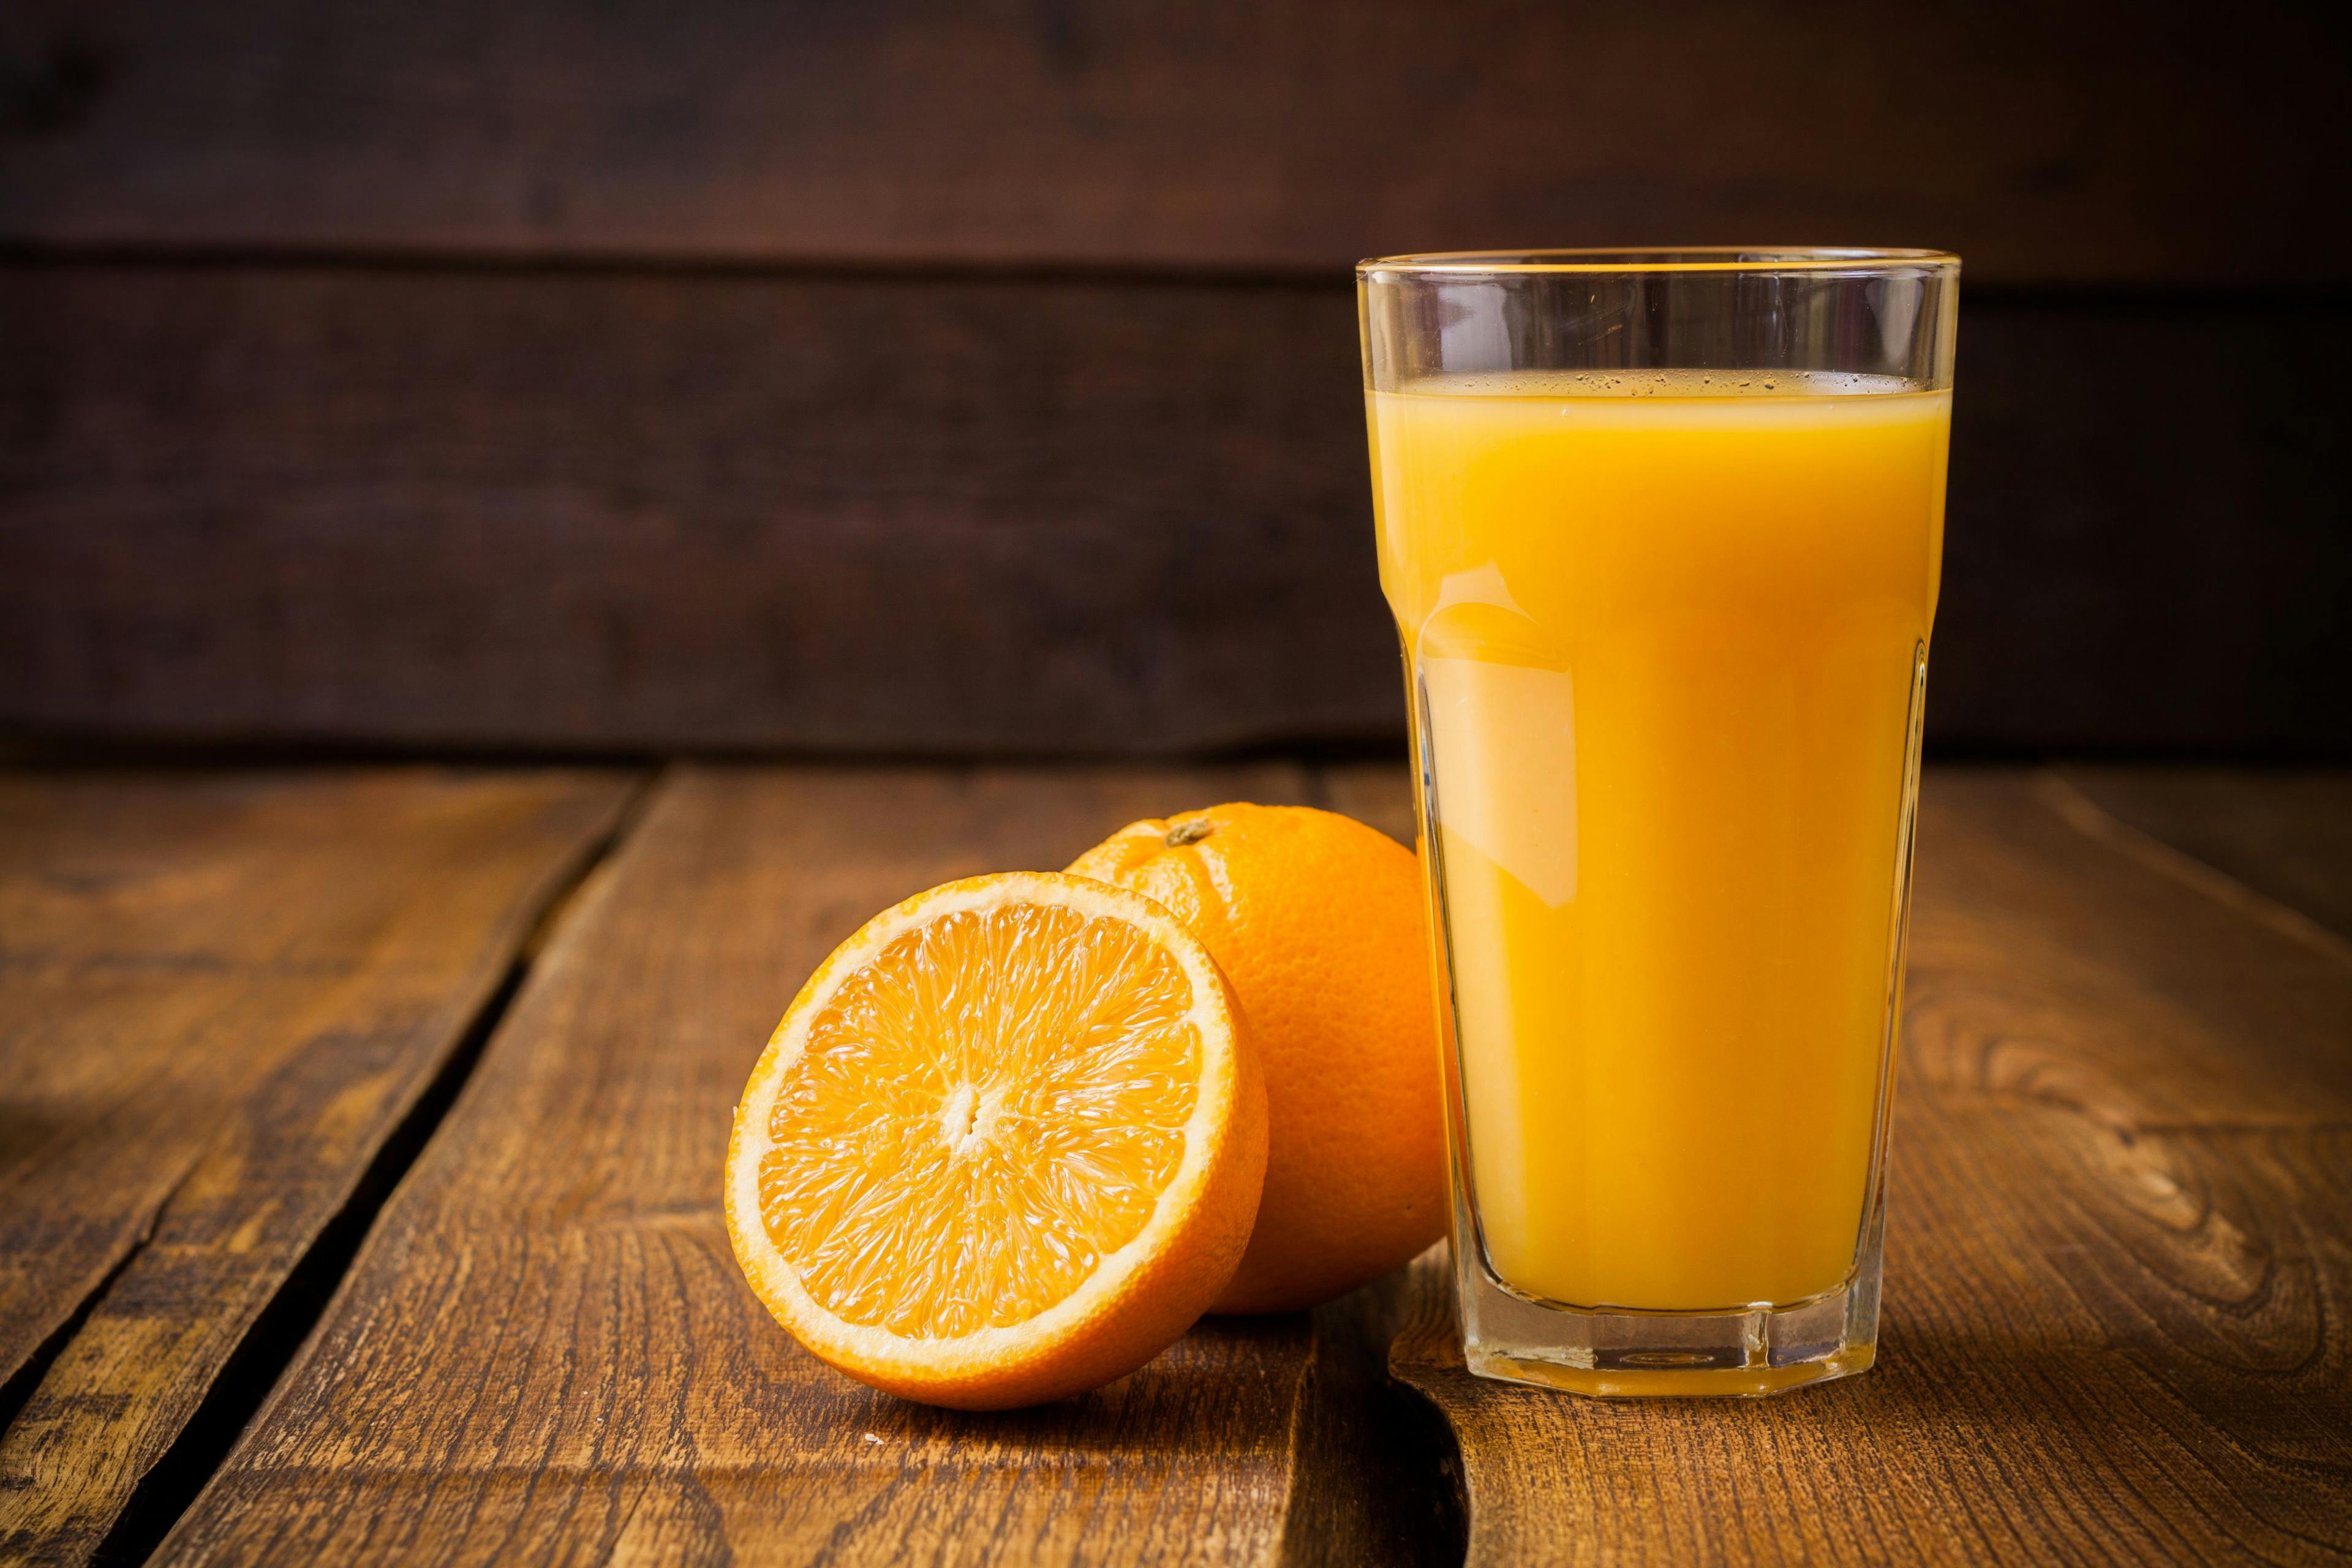 Orange fruit and glass of juice on brown wooden background | Image Credit: © avirid - stock.adobe.com.